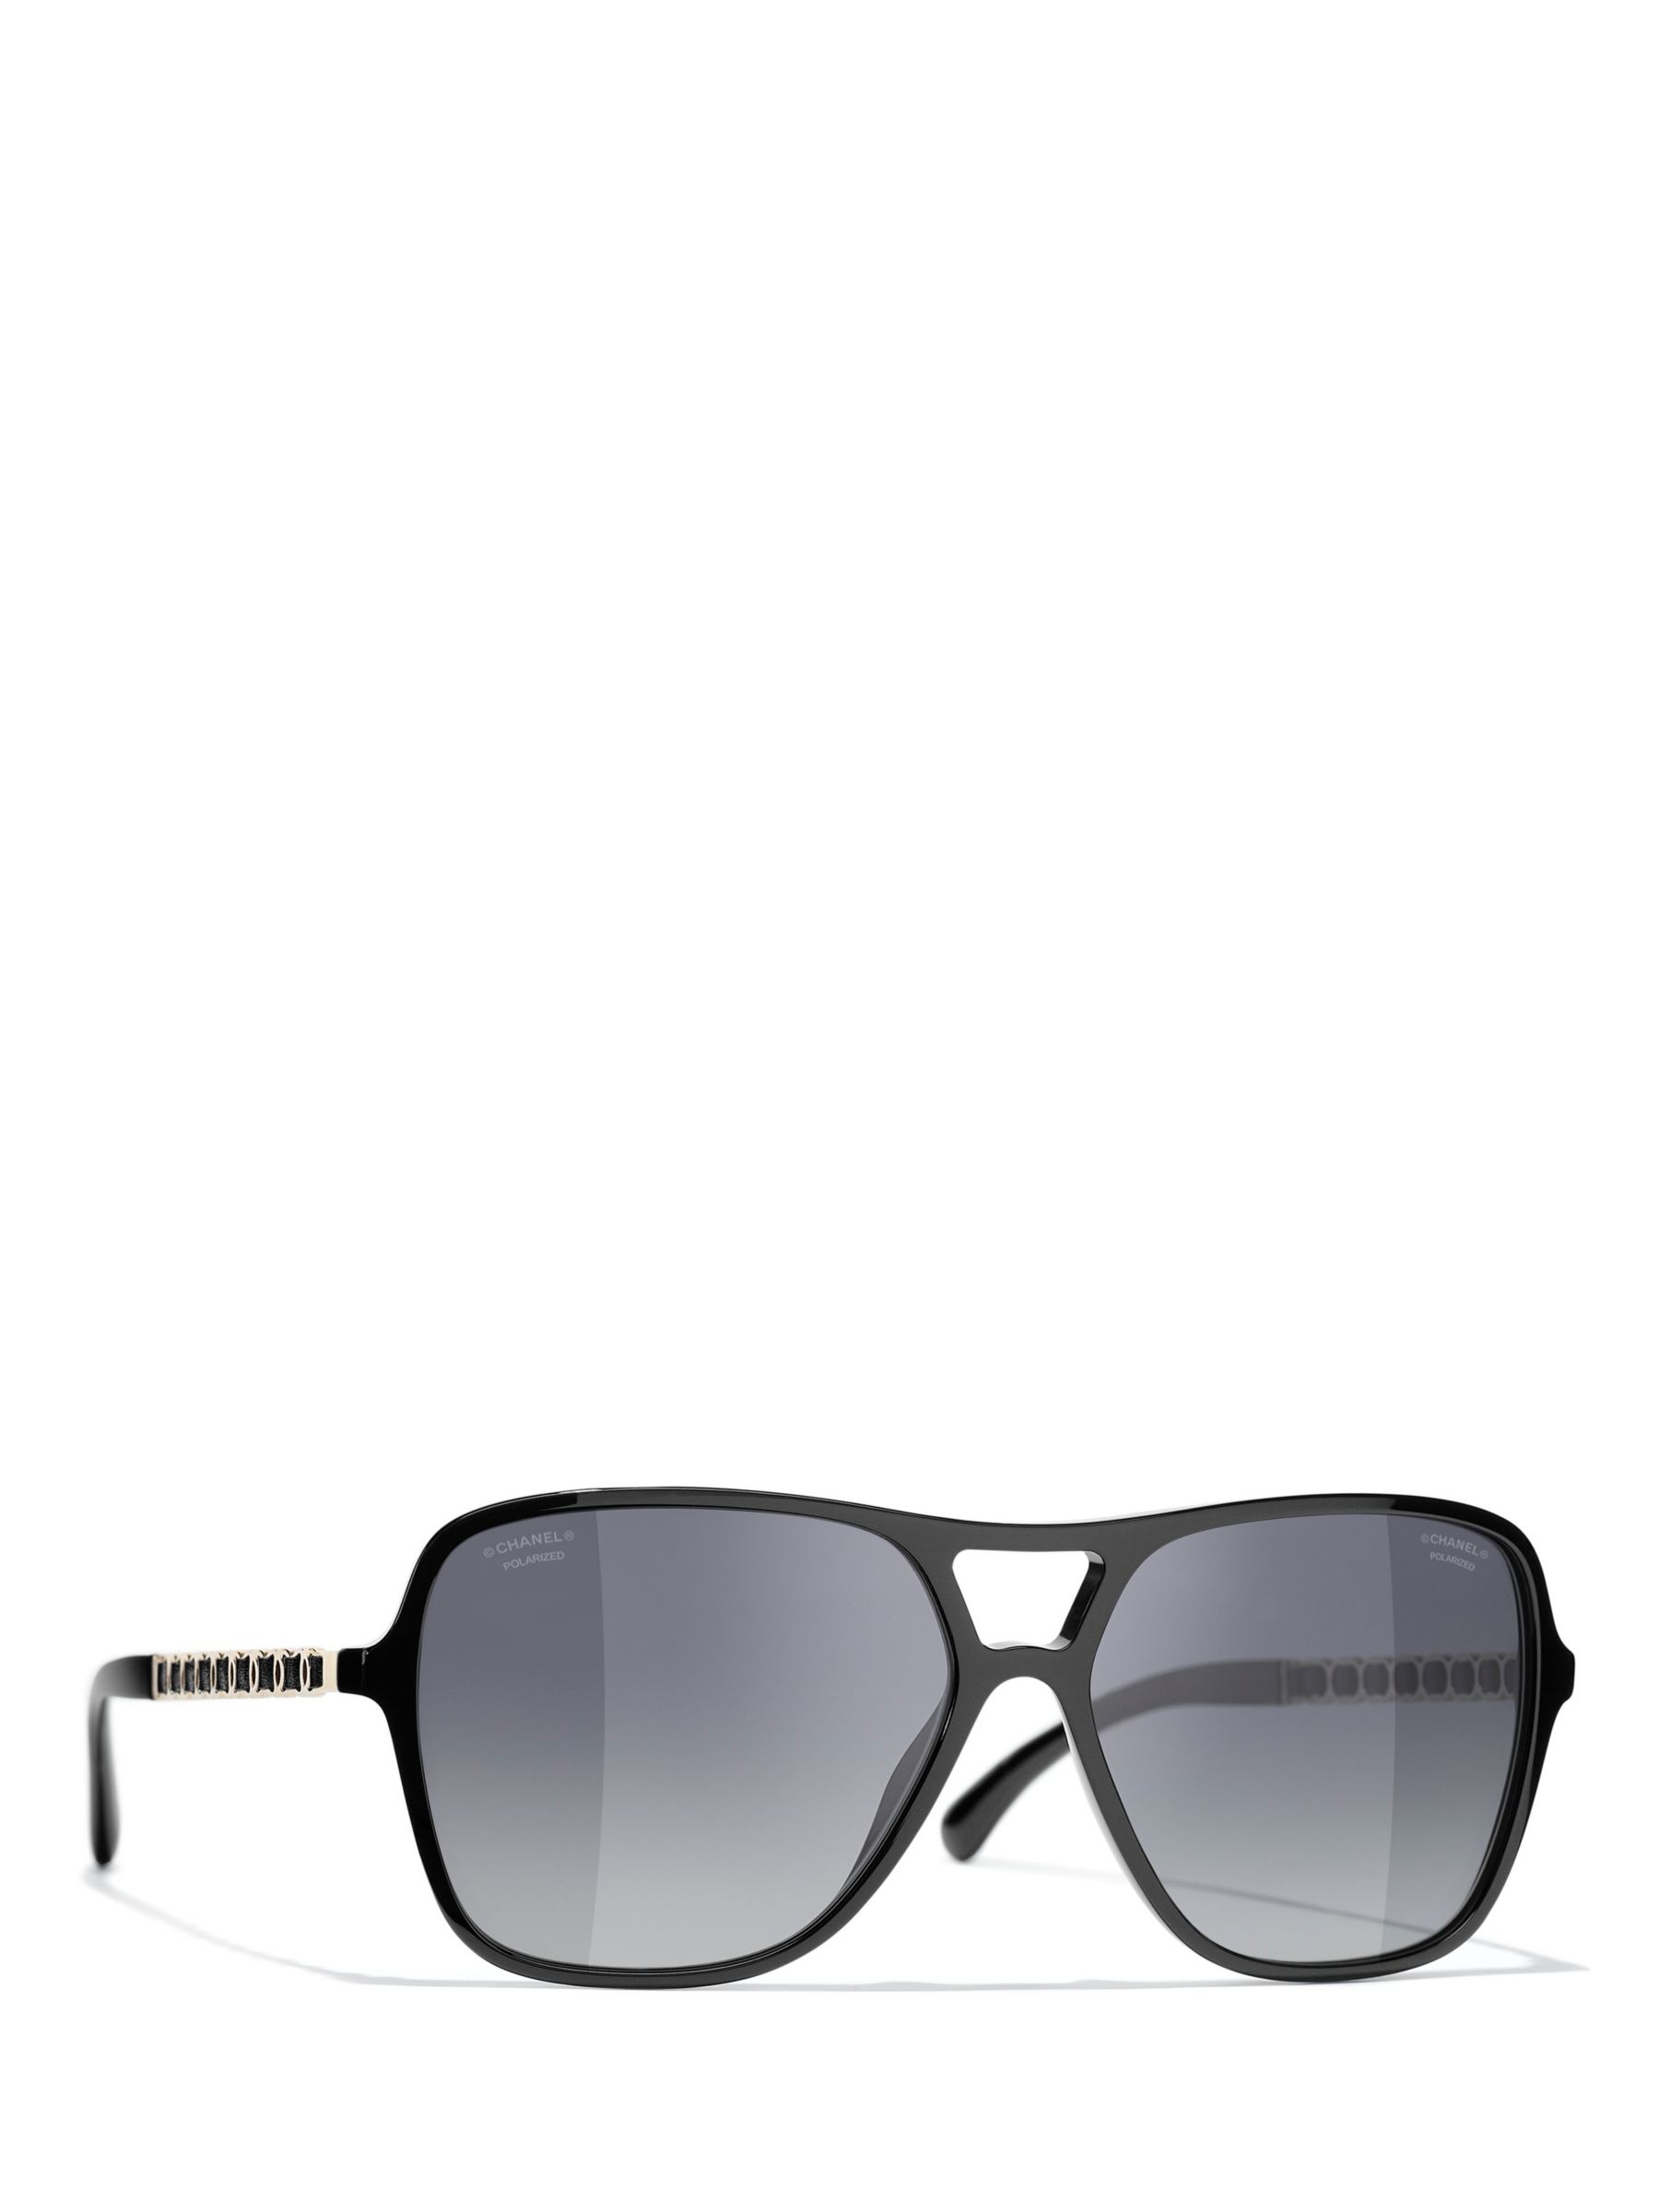 Chanel Rectangular Sunglasses Ch5427h Black/grey Gradient in Grey